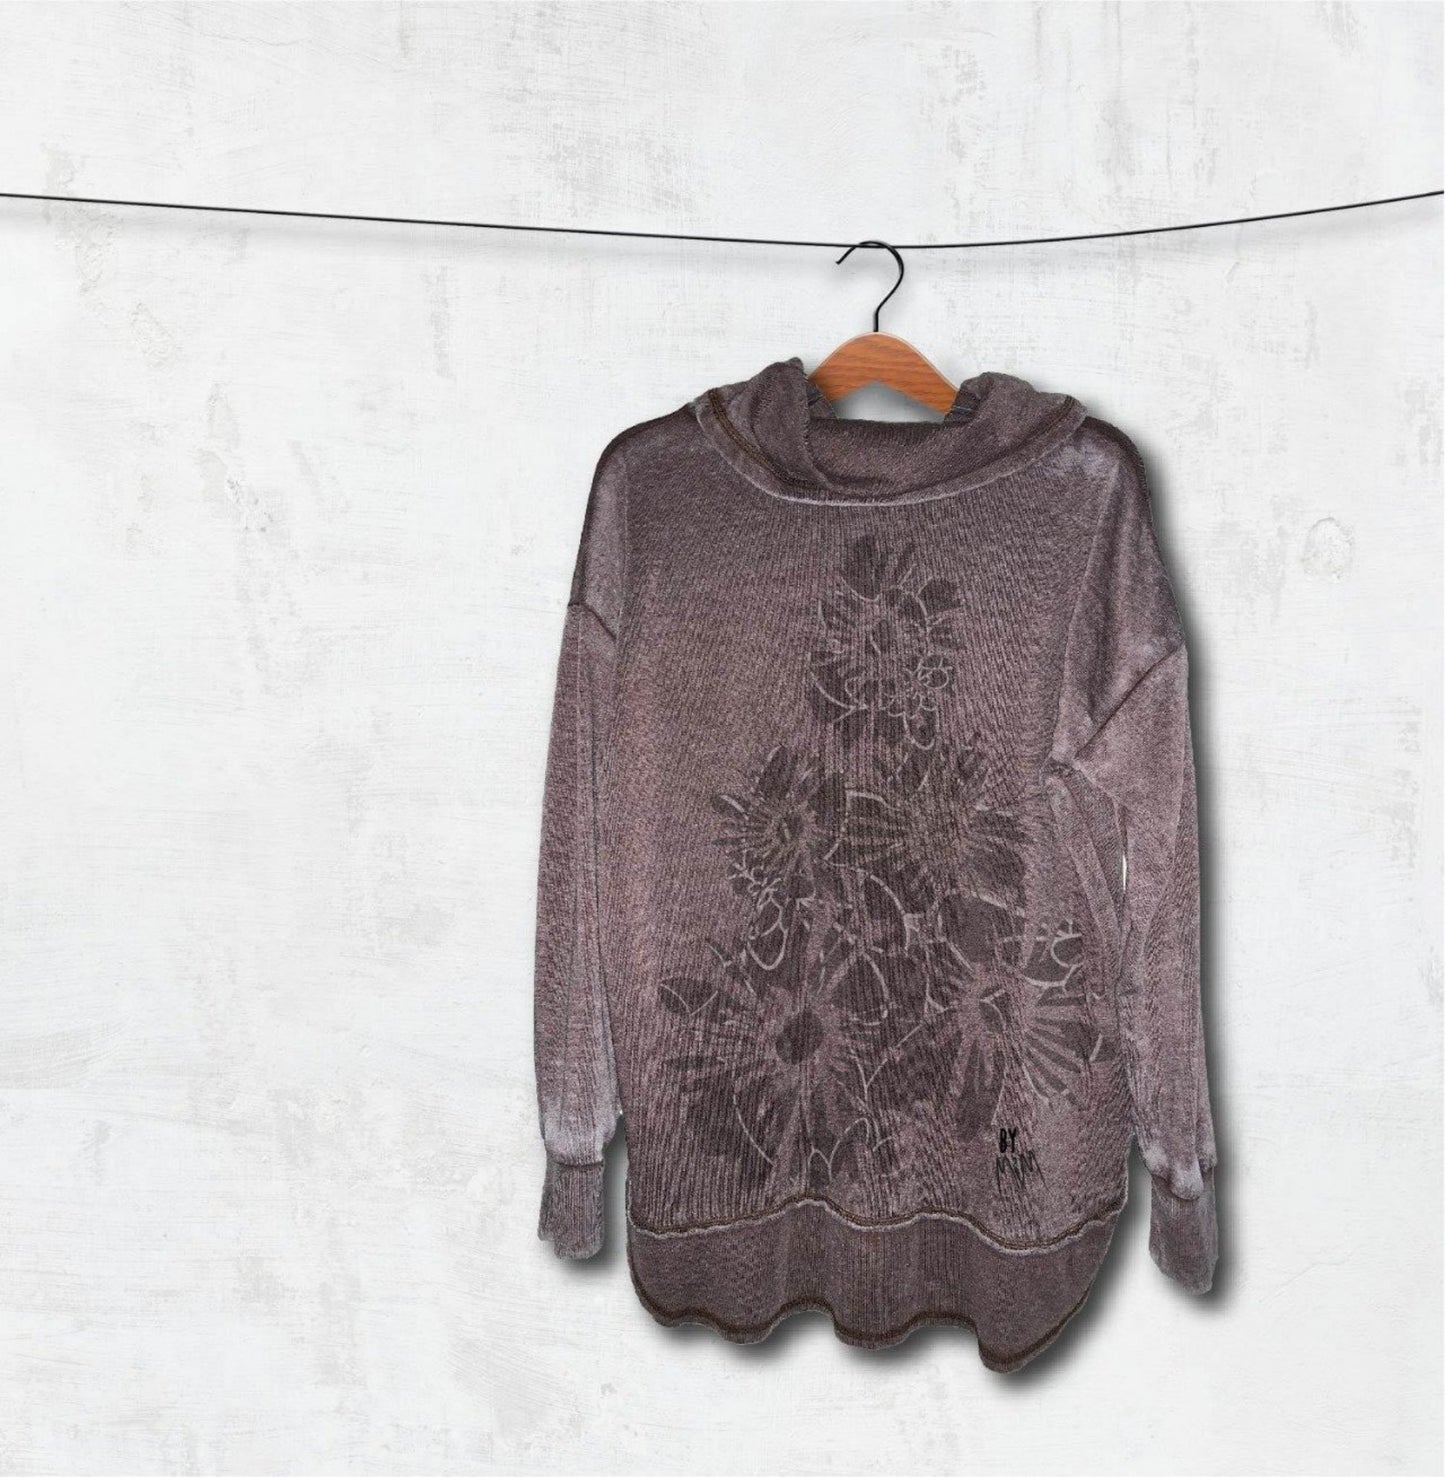 Cozy Chocolate Flower Sweatshirt - Printed Original Design